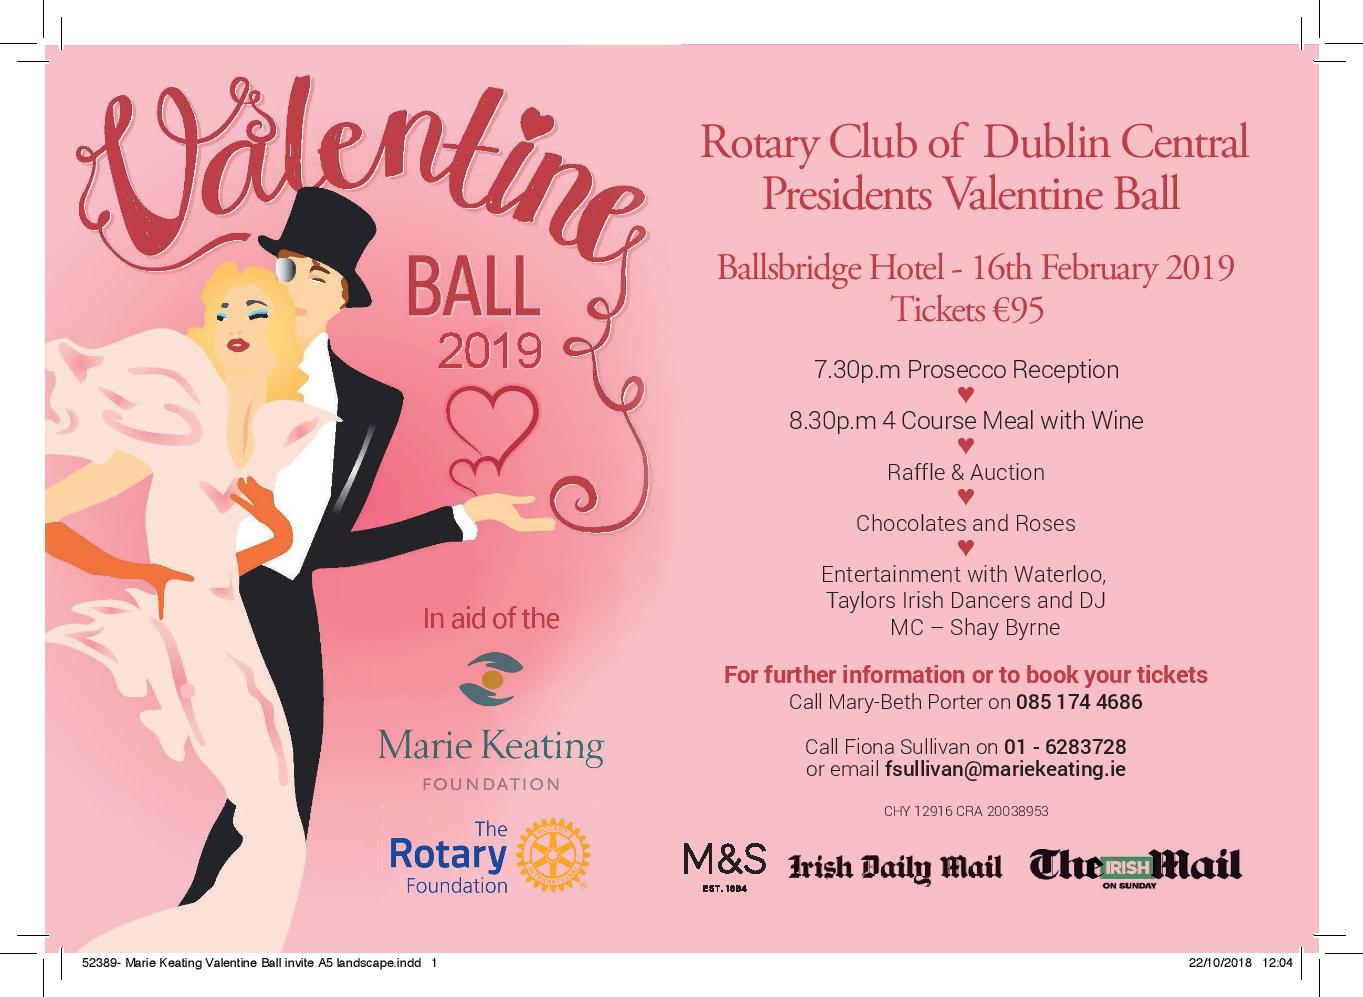 Rotary Club of Dublin Central Valentine Ball 2019